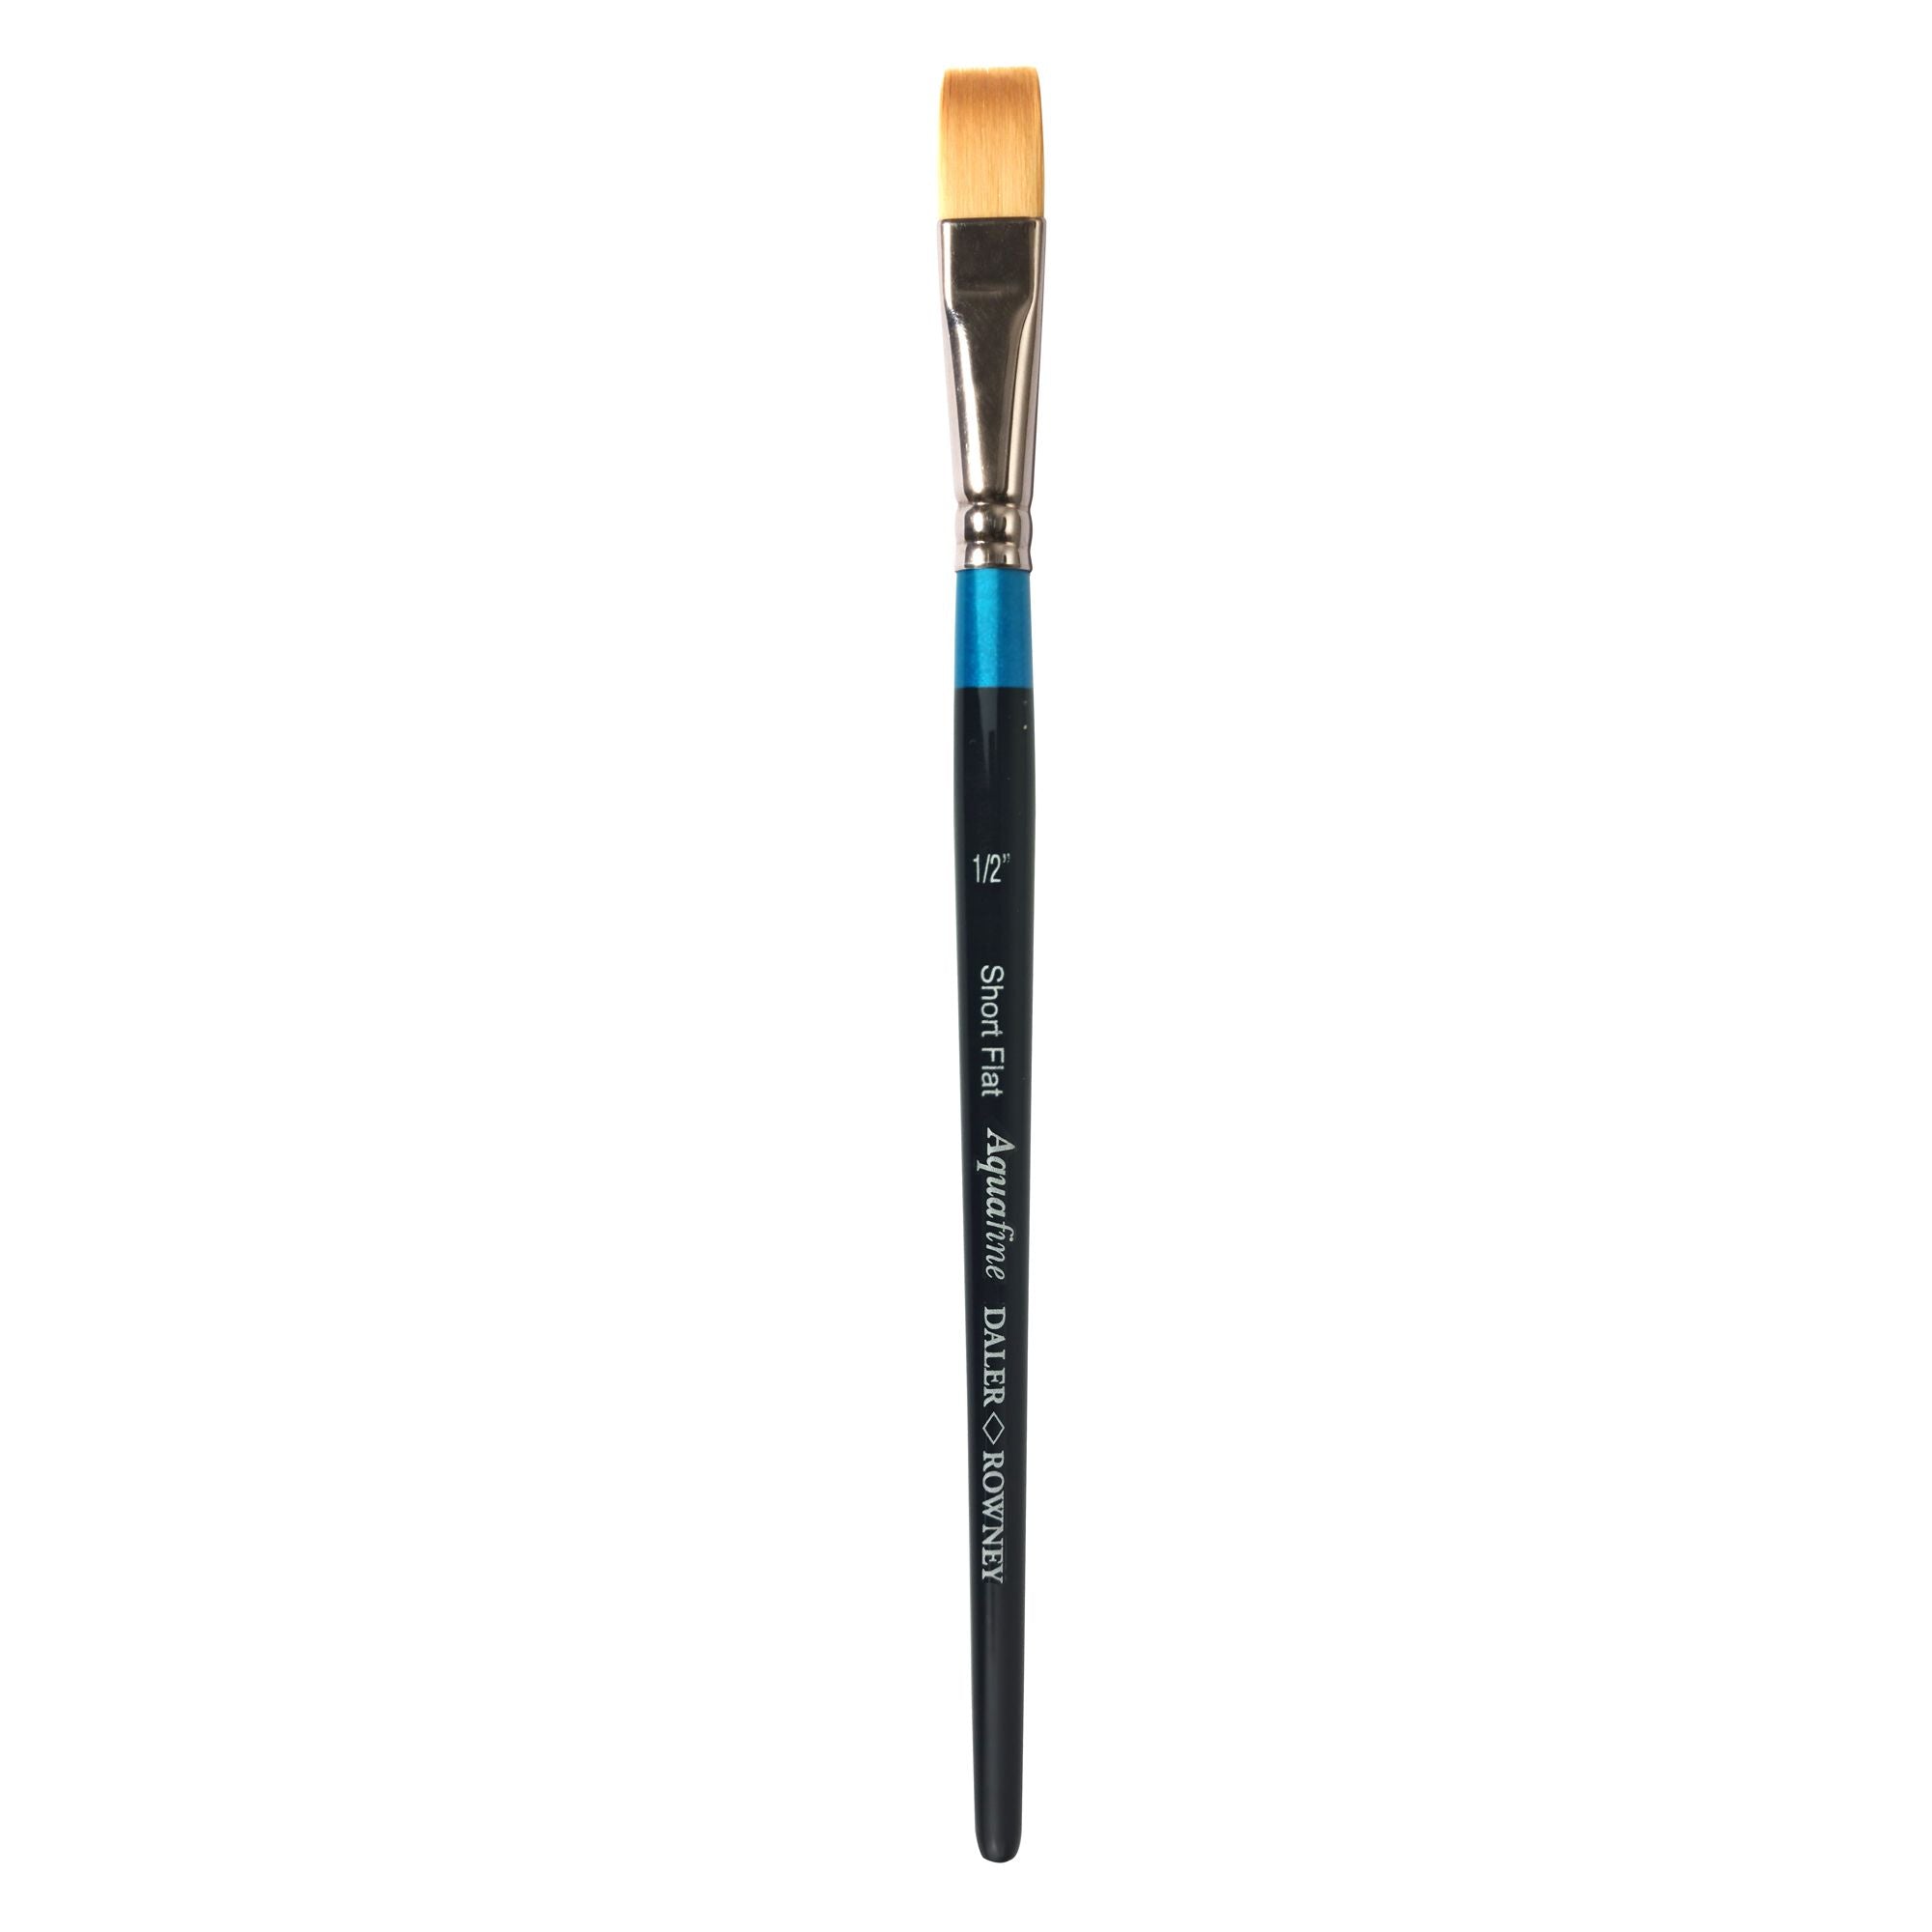 Daler Rowney Aquafine AF55 Watercolour Brush Short Flat 1/2 inch